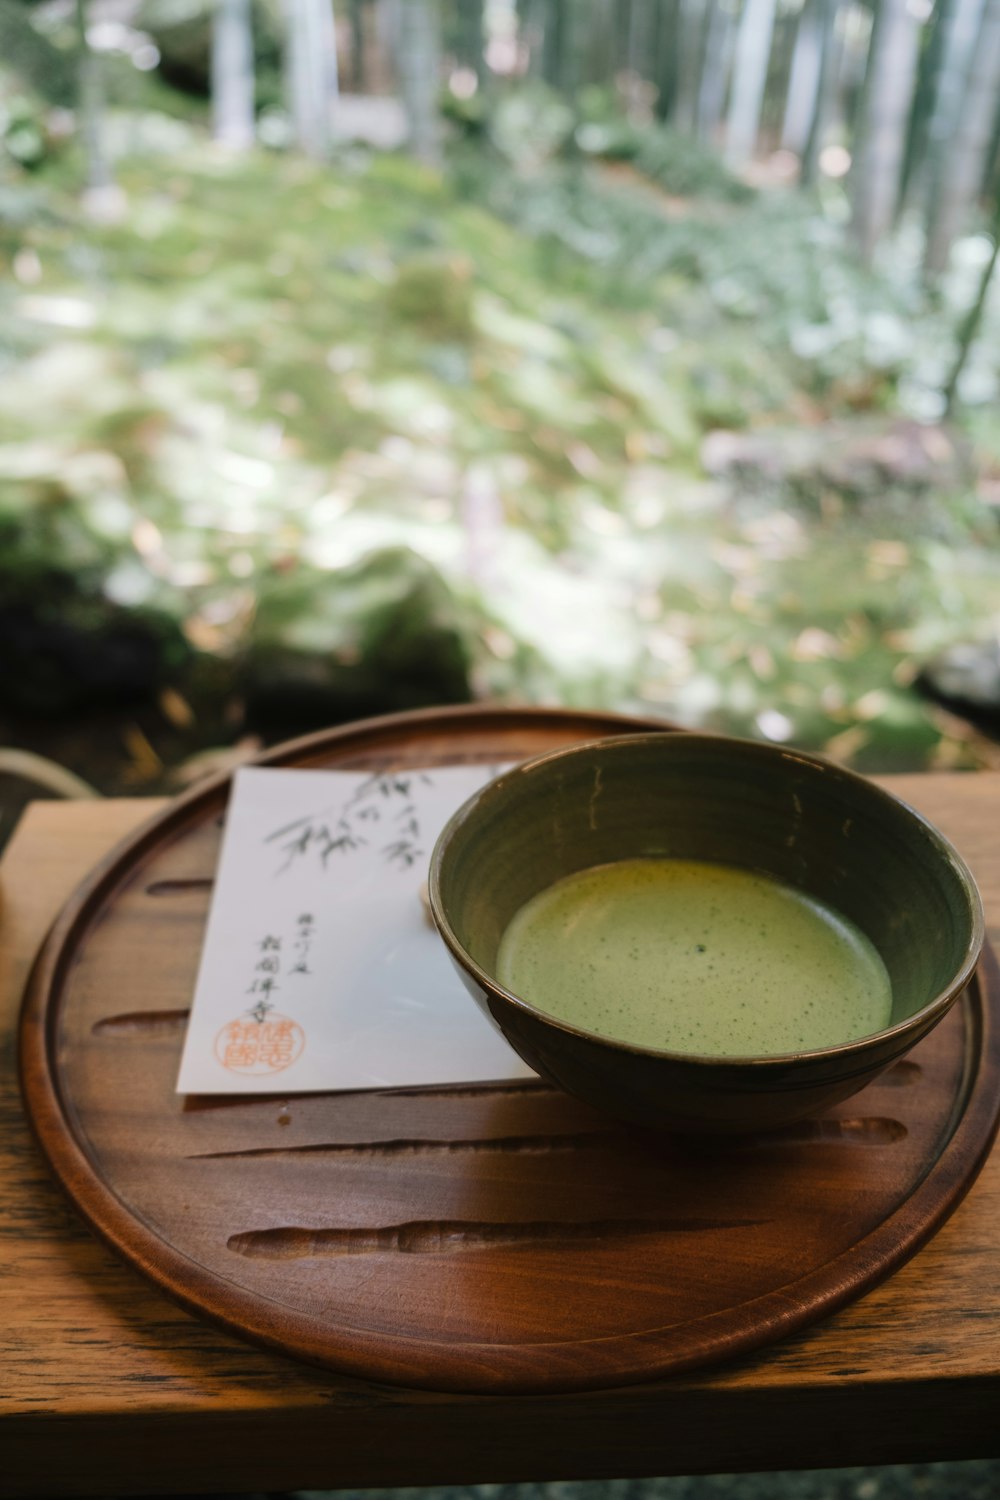 Grüner Tee auf grüner Keramik-Teetasse